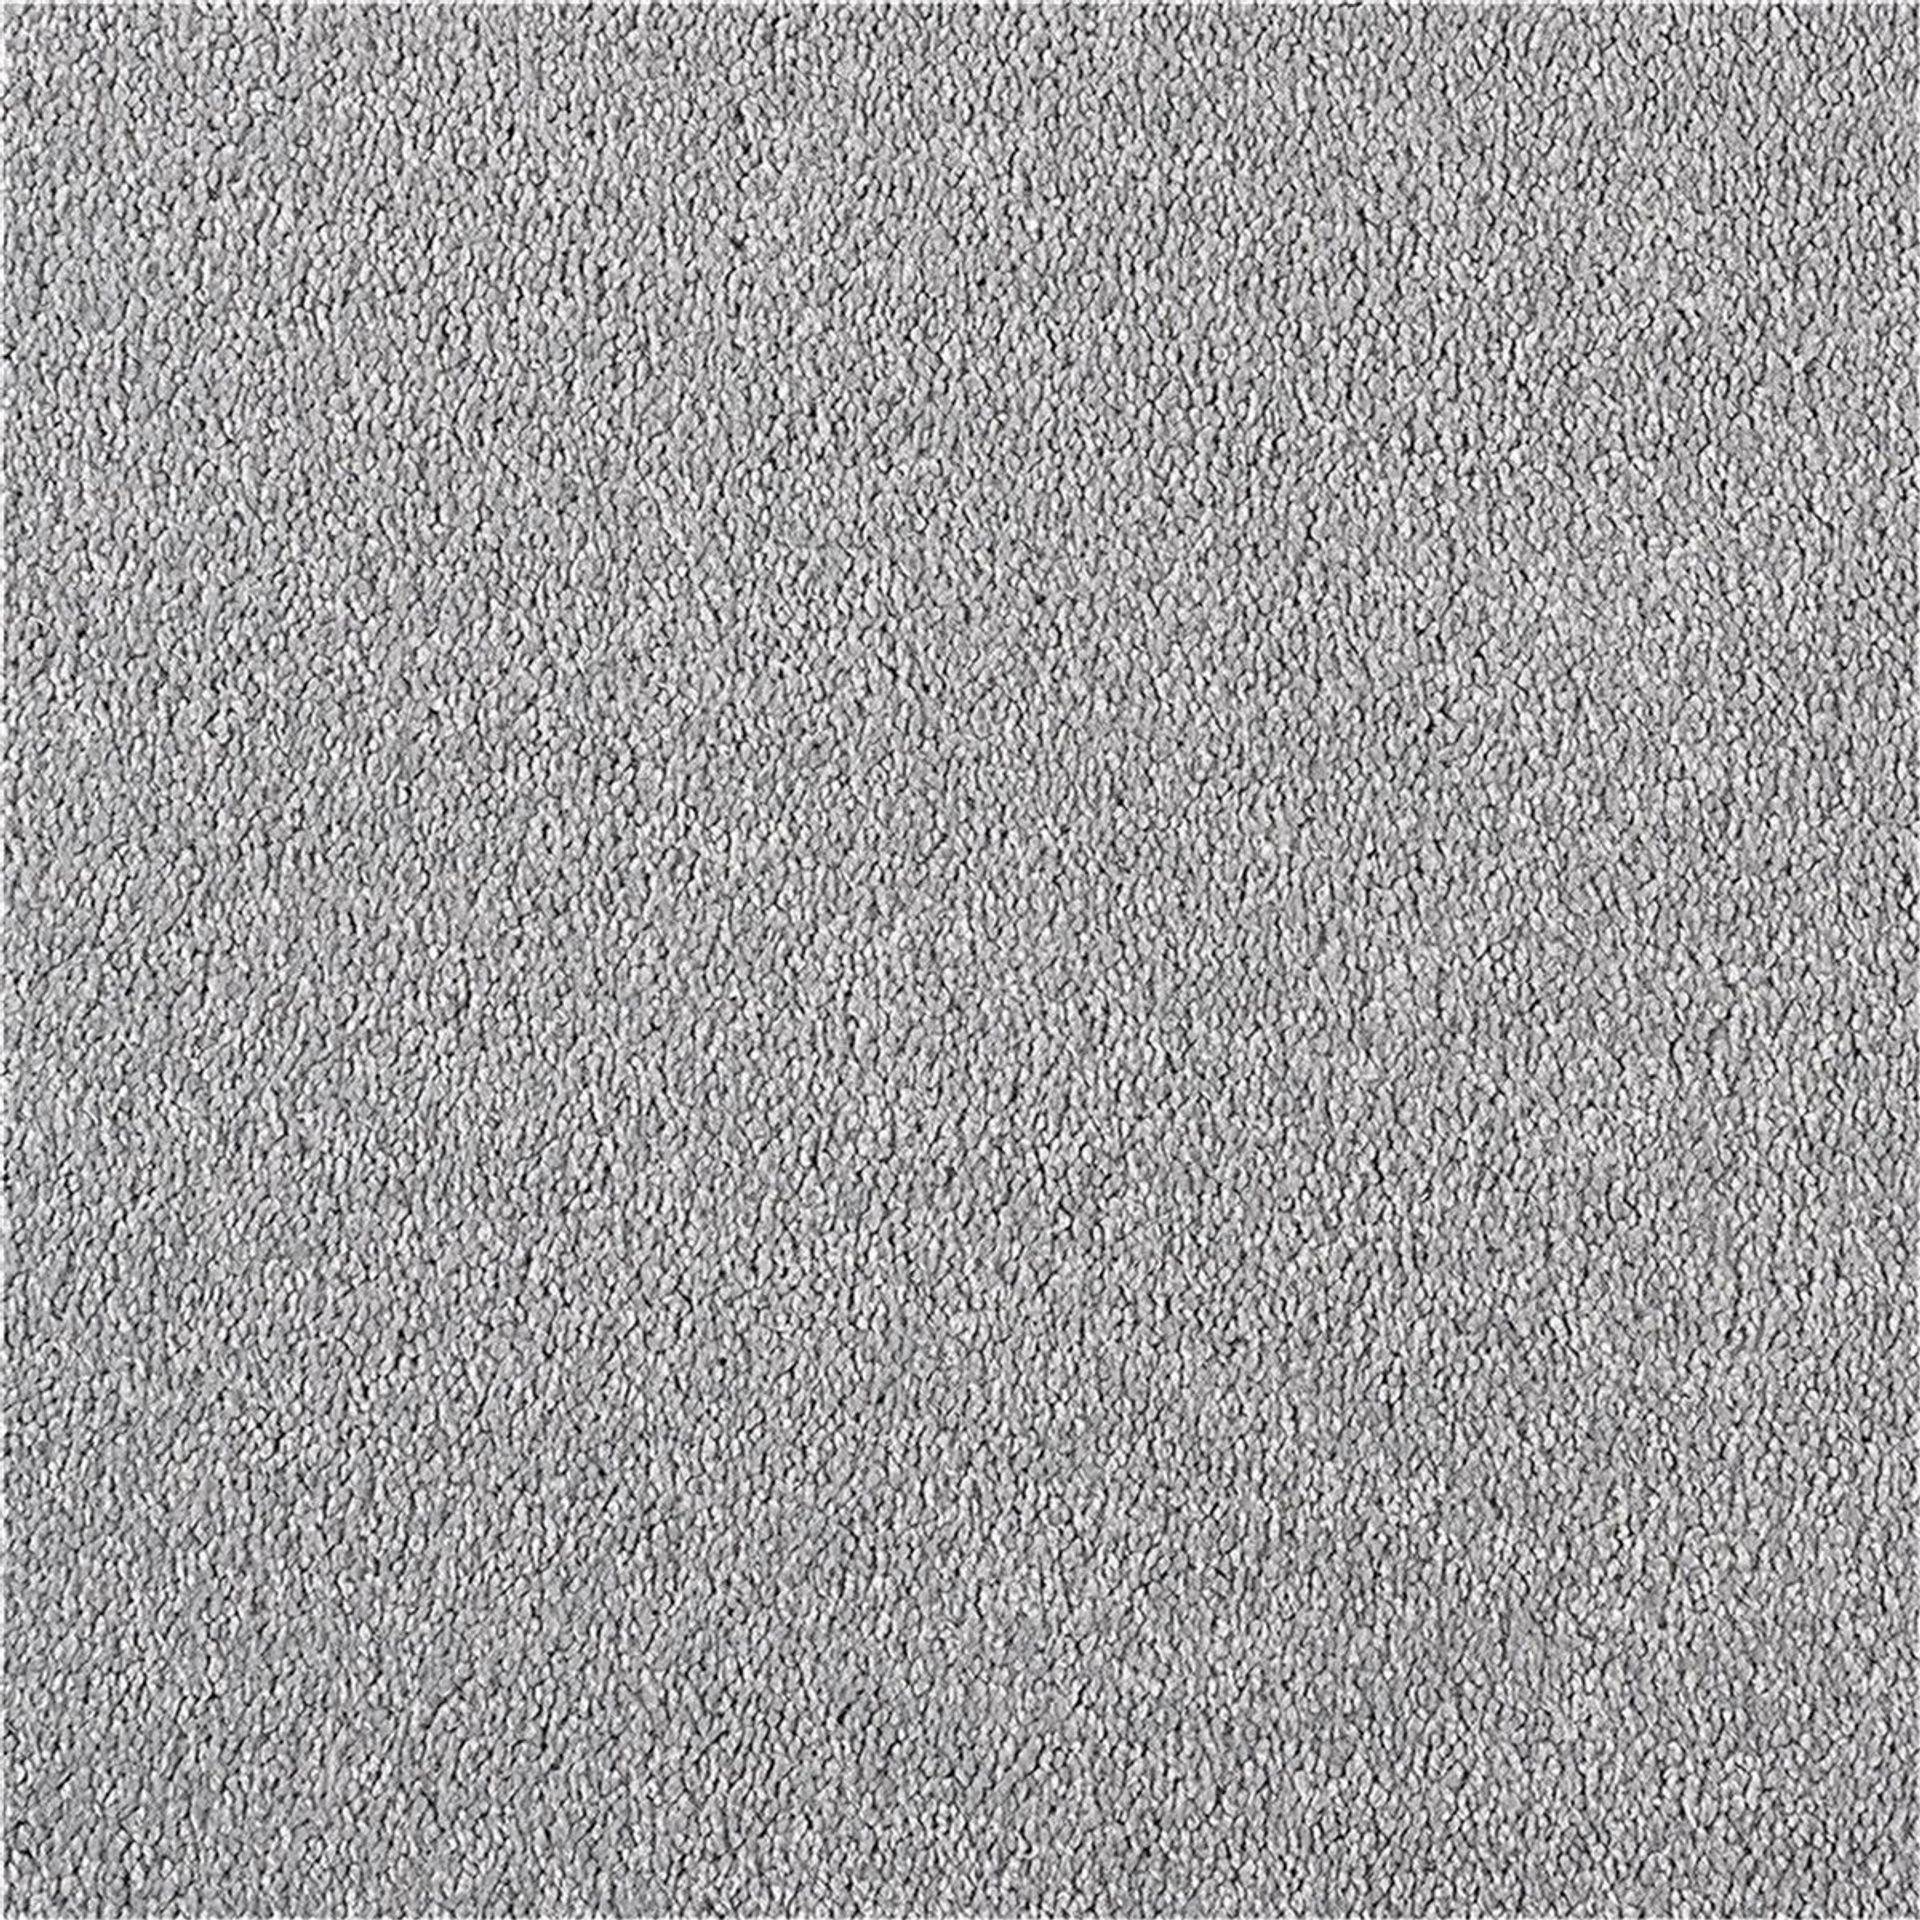 Teppichboden Infloor-Girloon Chill-Wave Frisé Grau 520 uni - Rollenbreite 400 cm